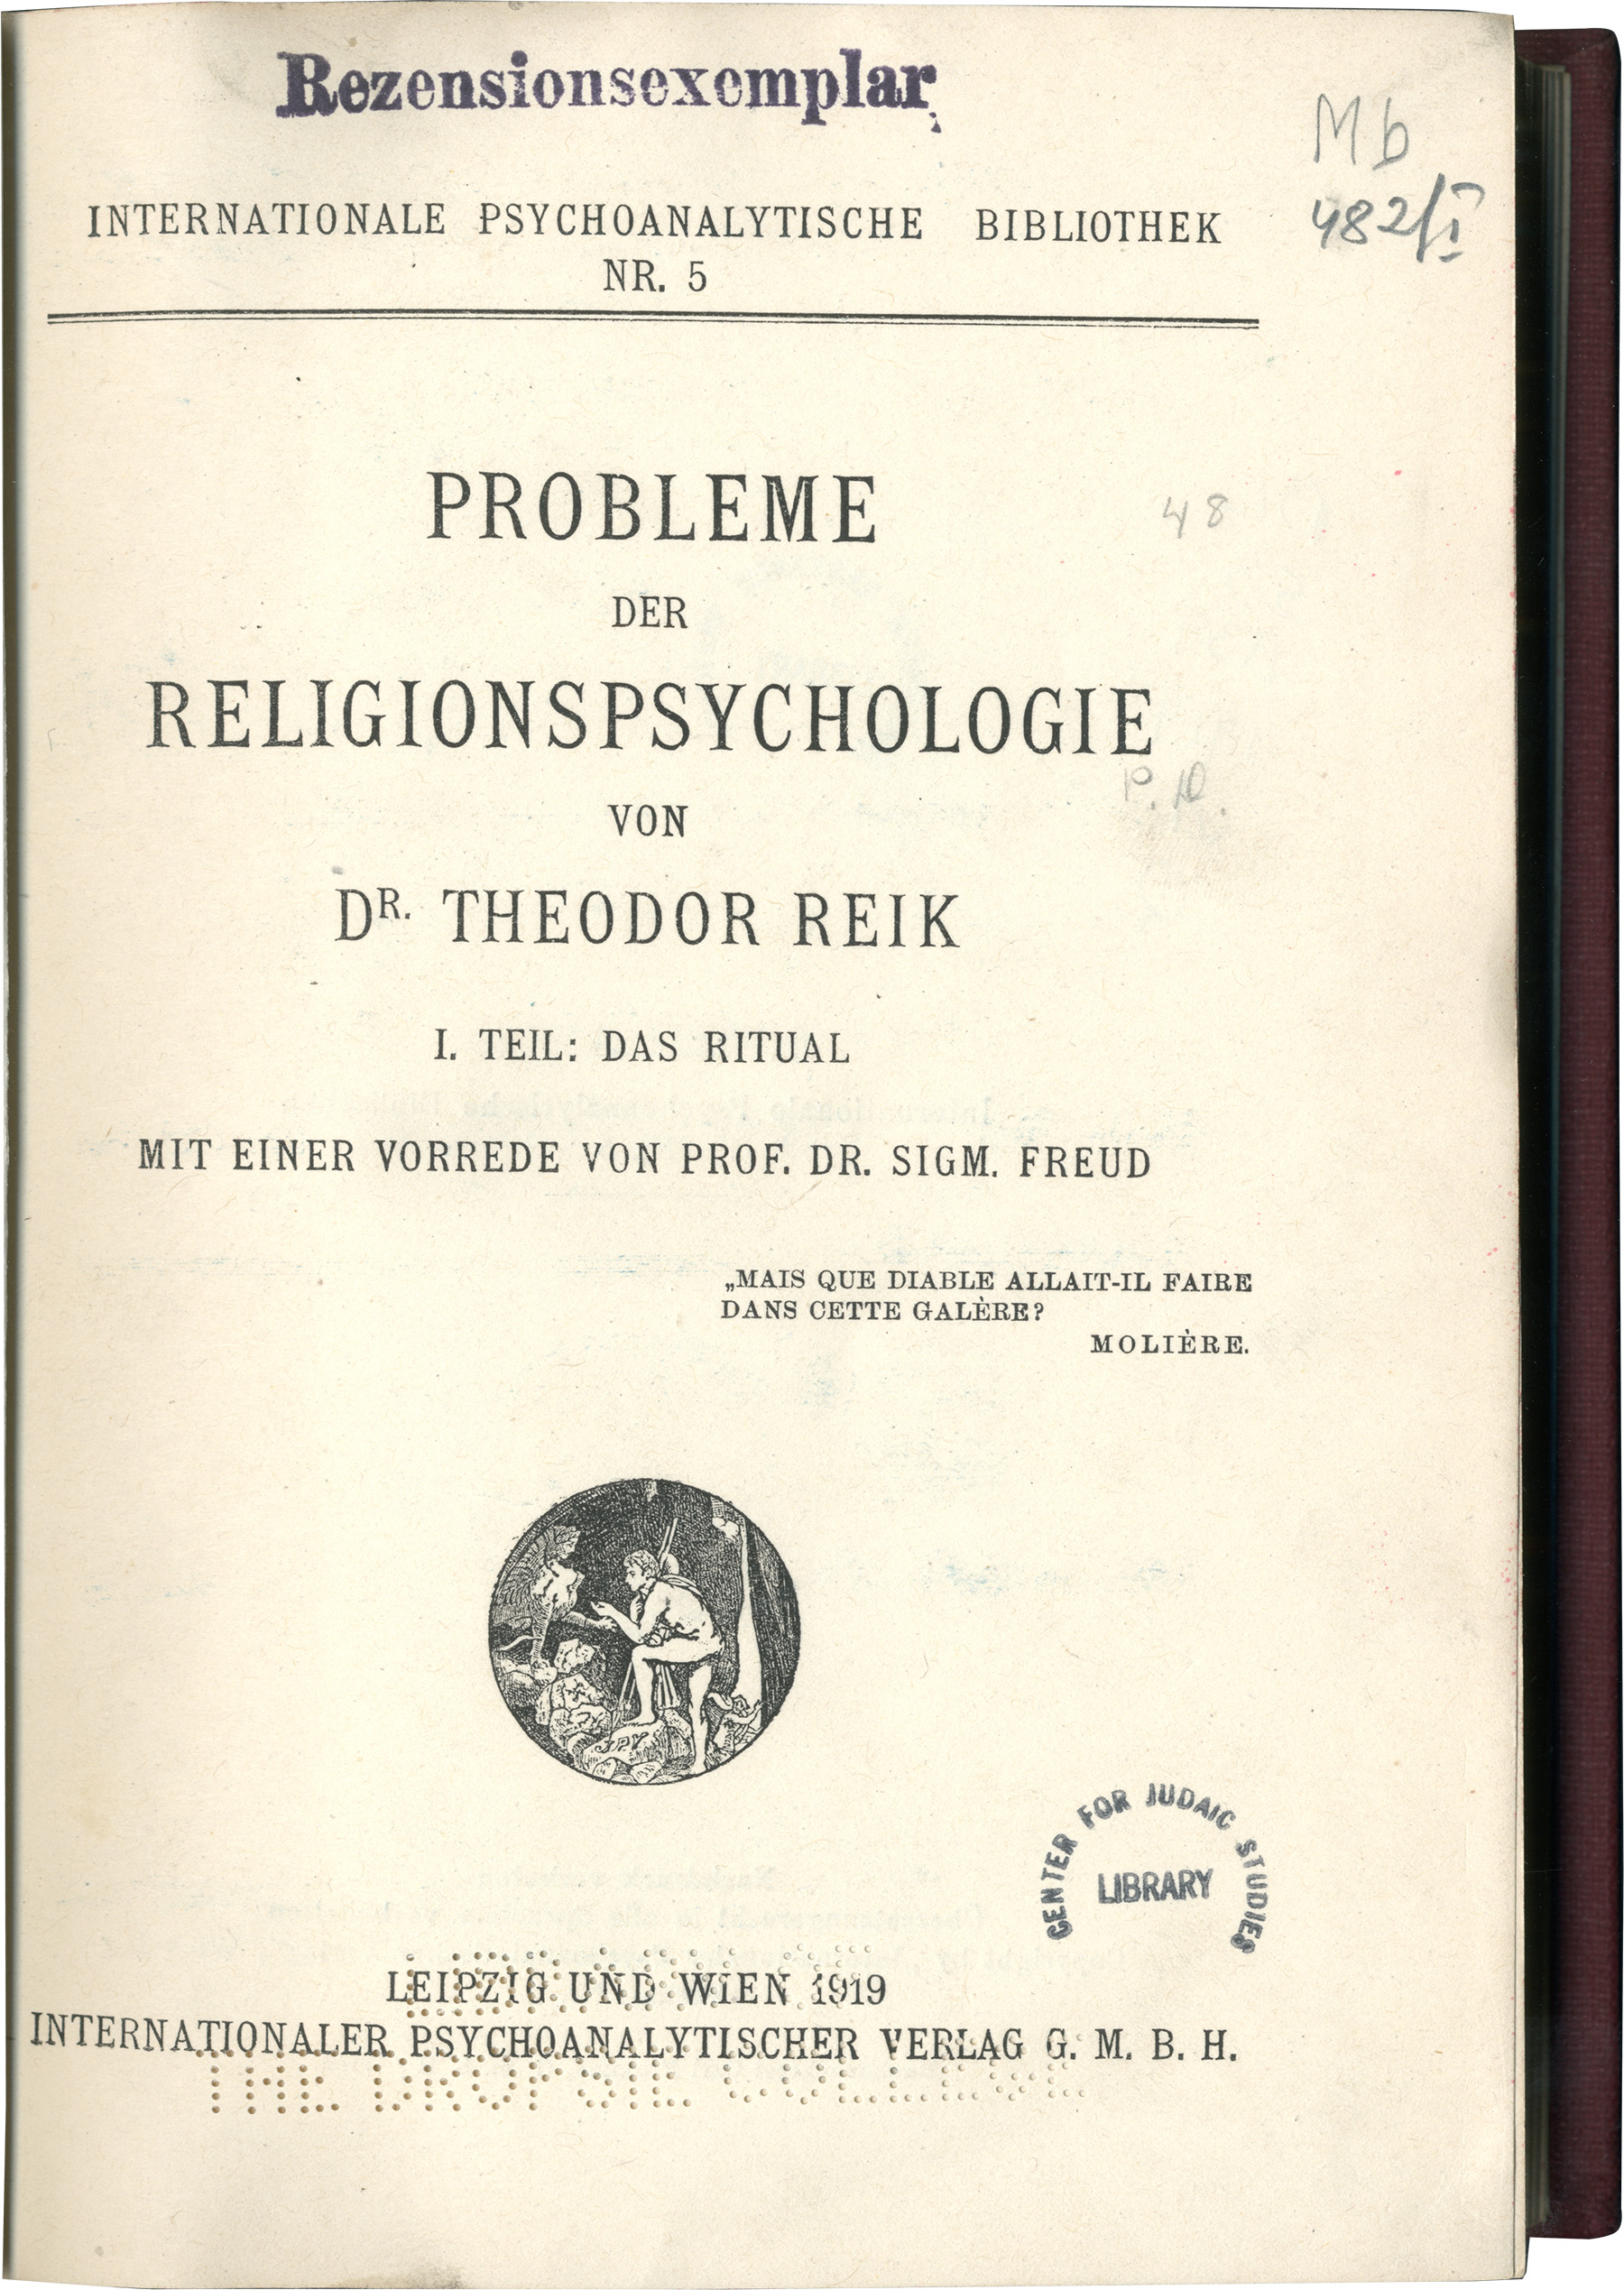 Title page of Probleme der Religionspsychologie